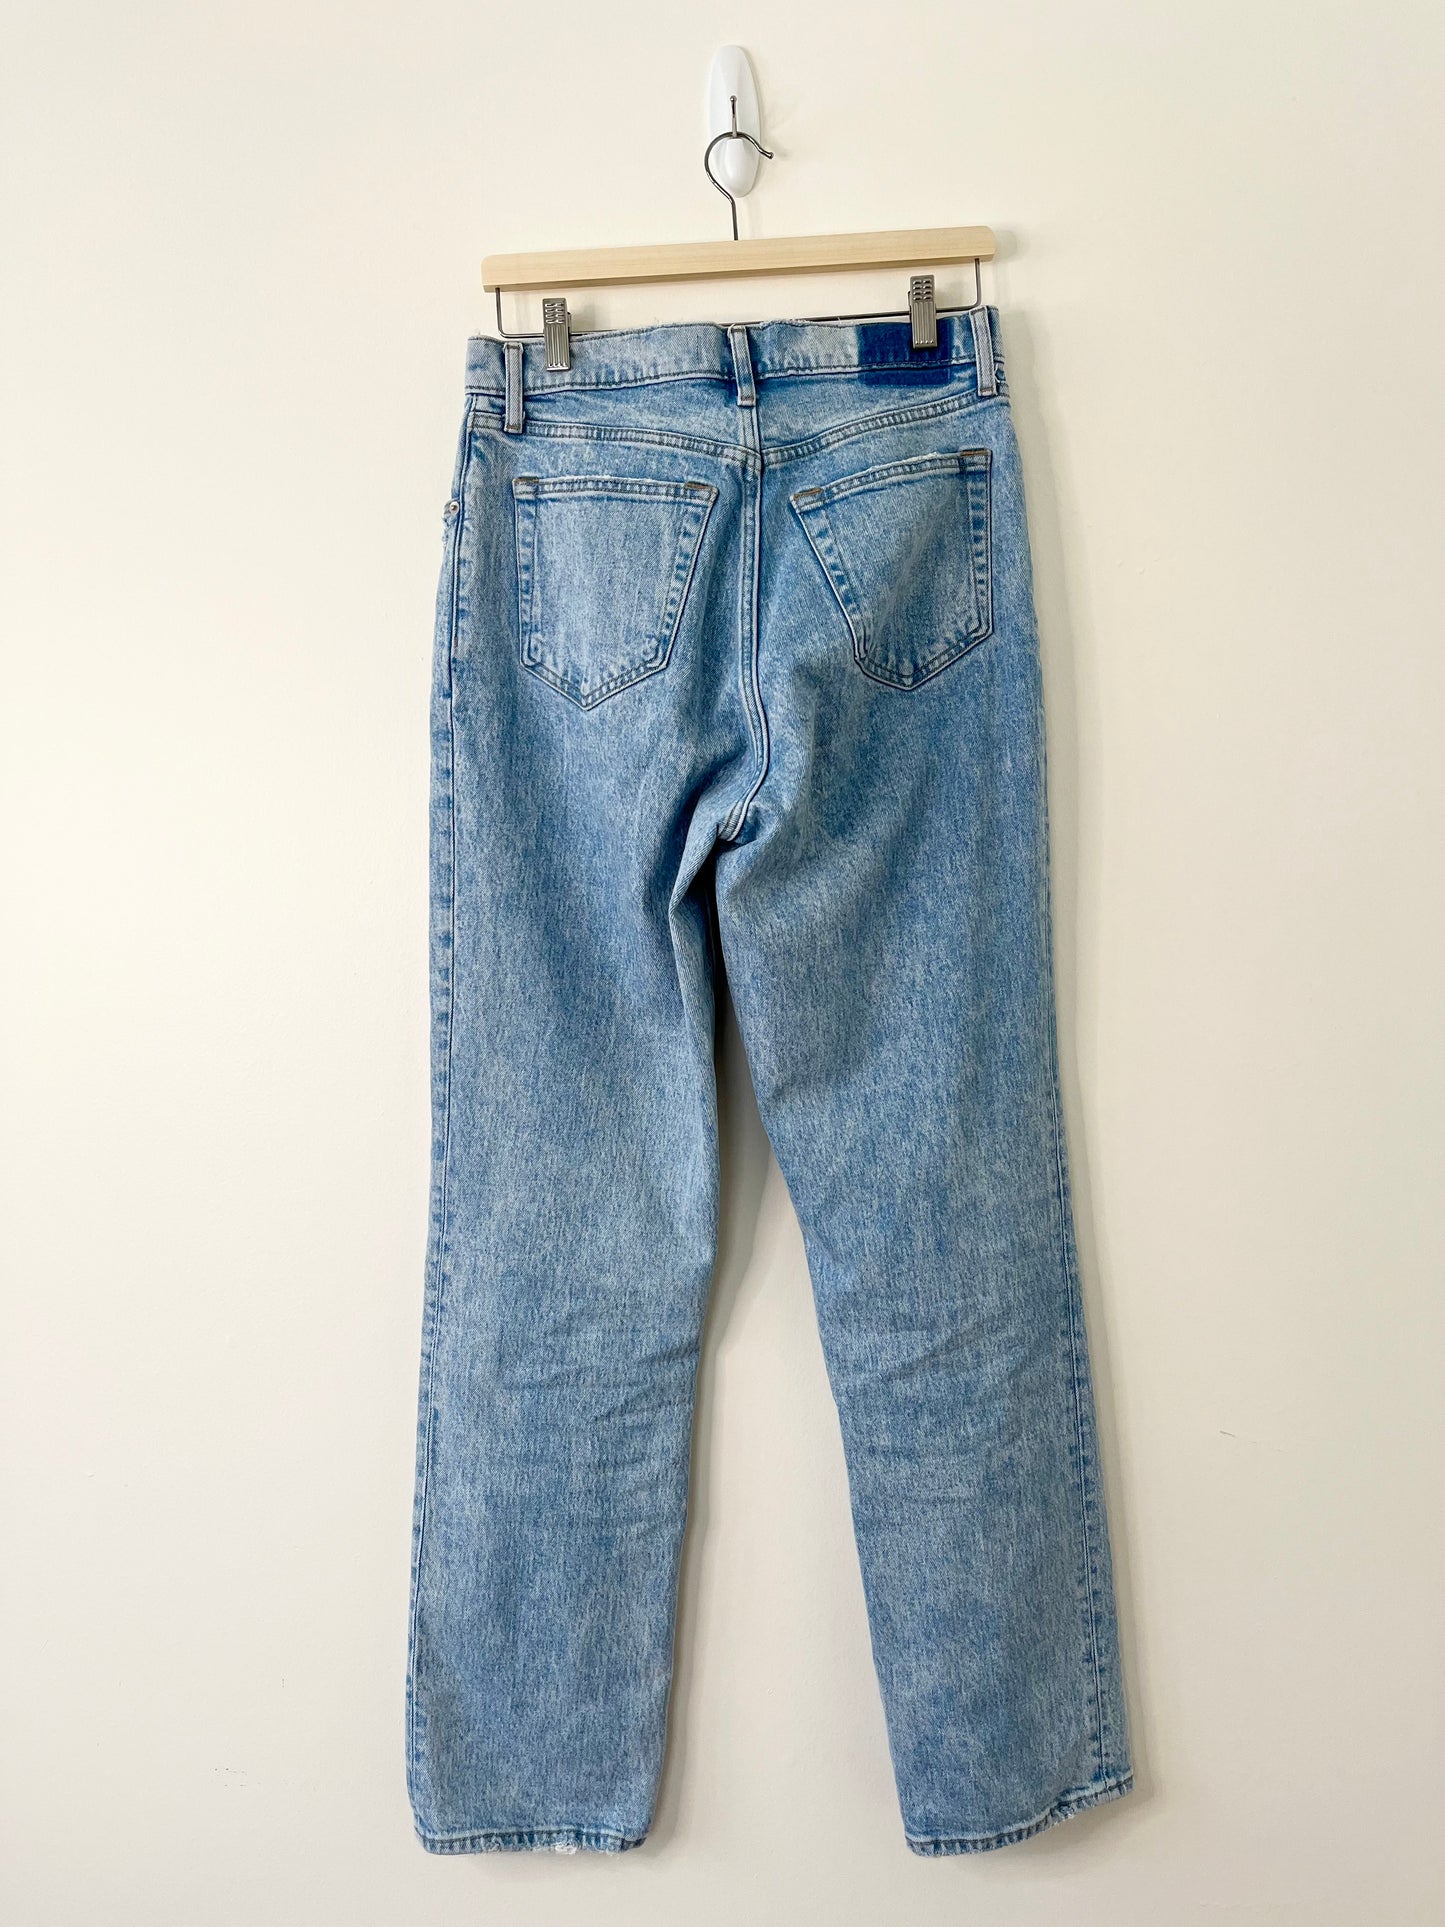 Abercrombie Crossover Jeans (16" across waist)